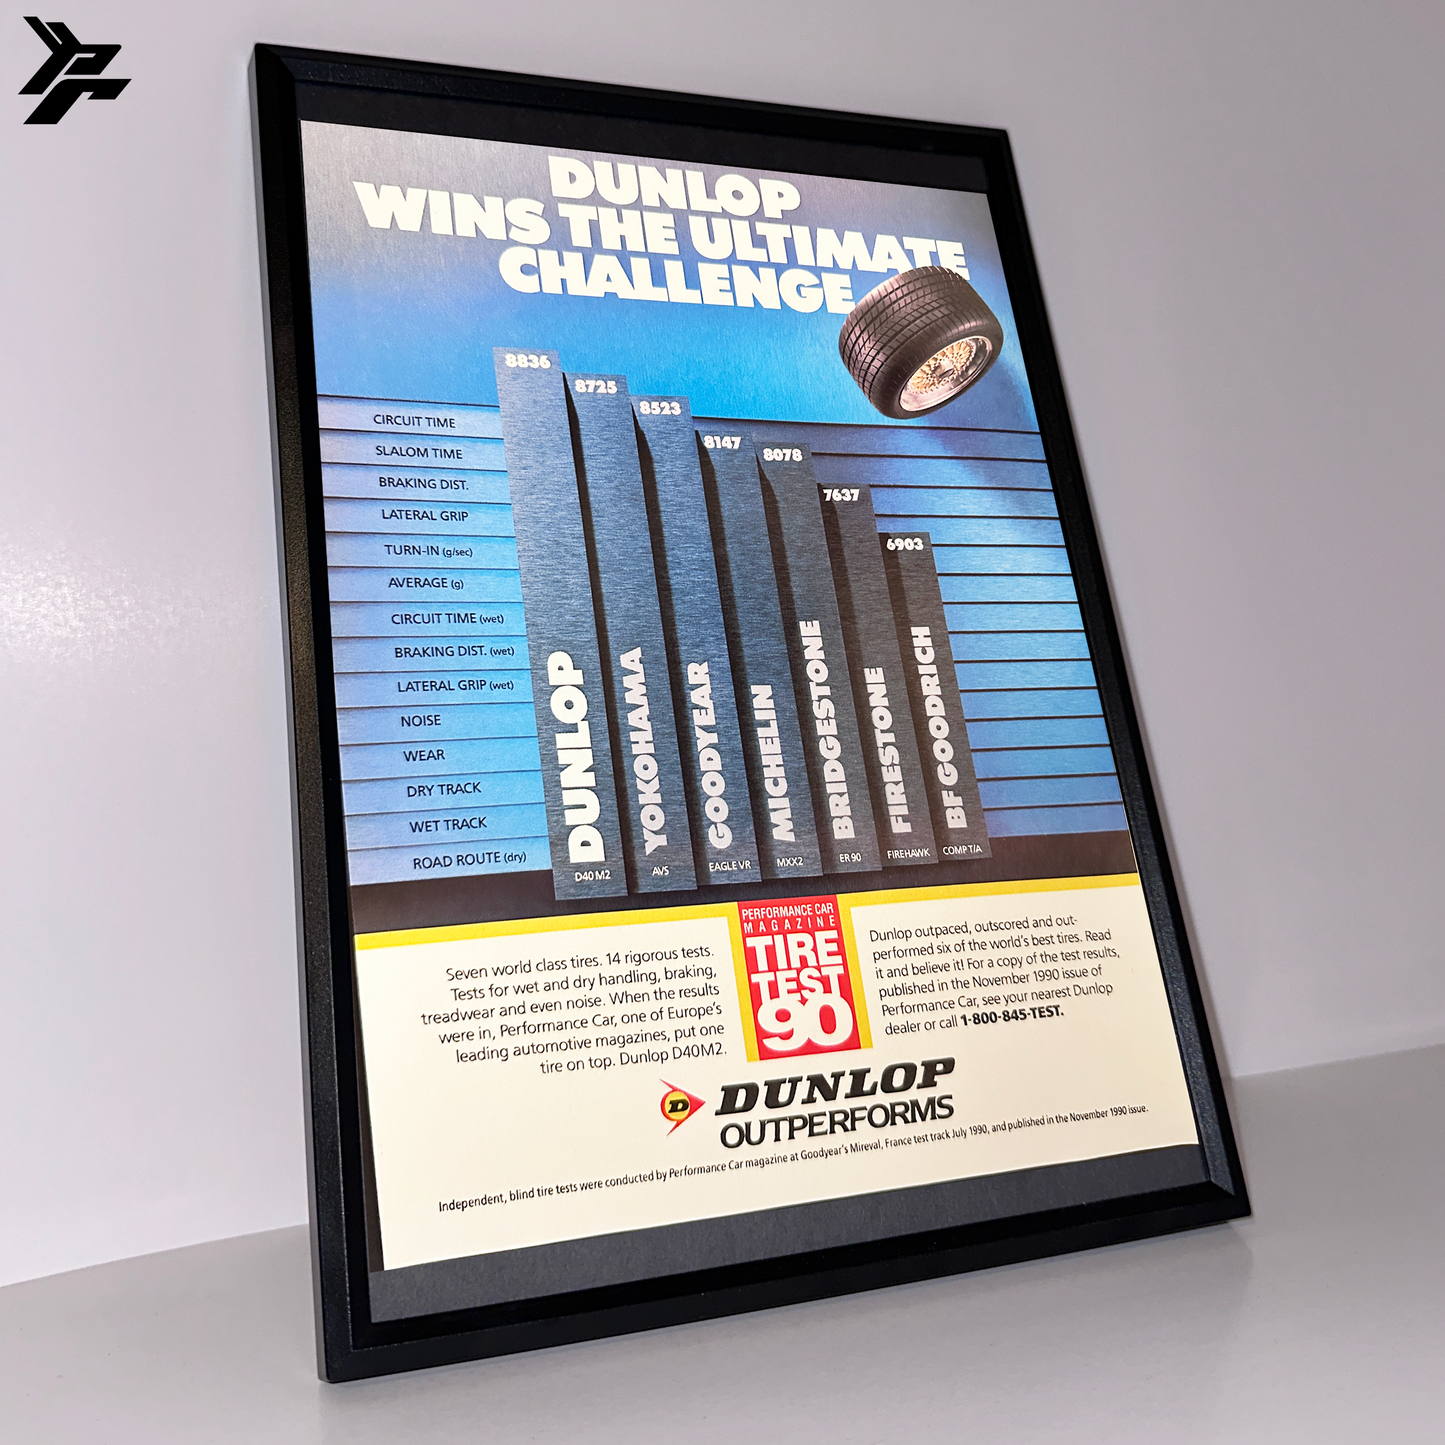 Dunlop wins the ultimate challenge framed ad